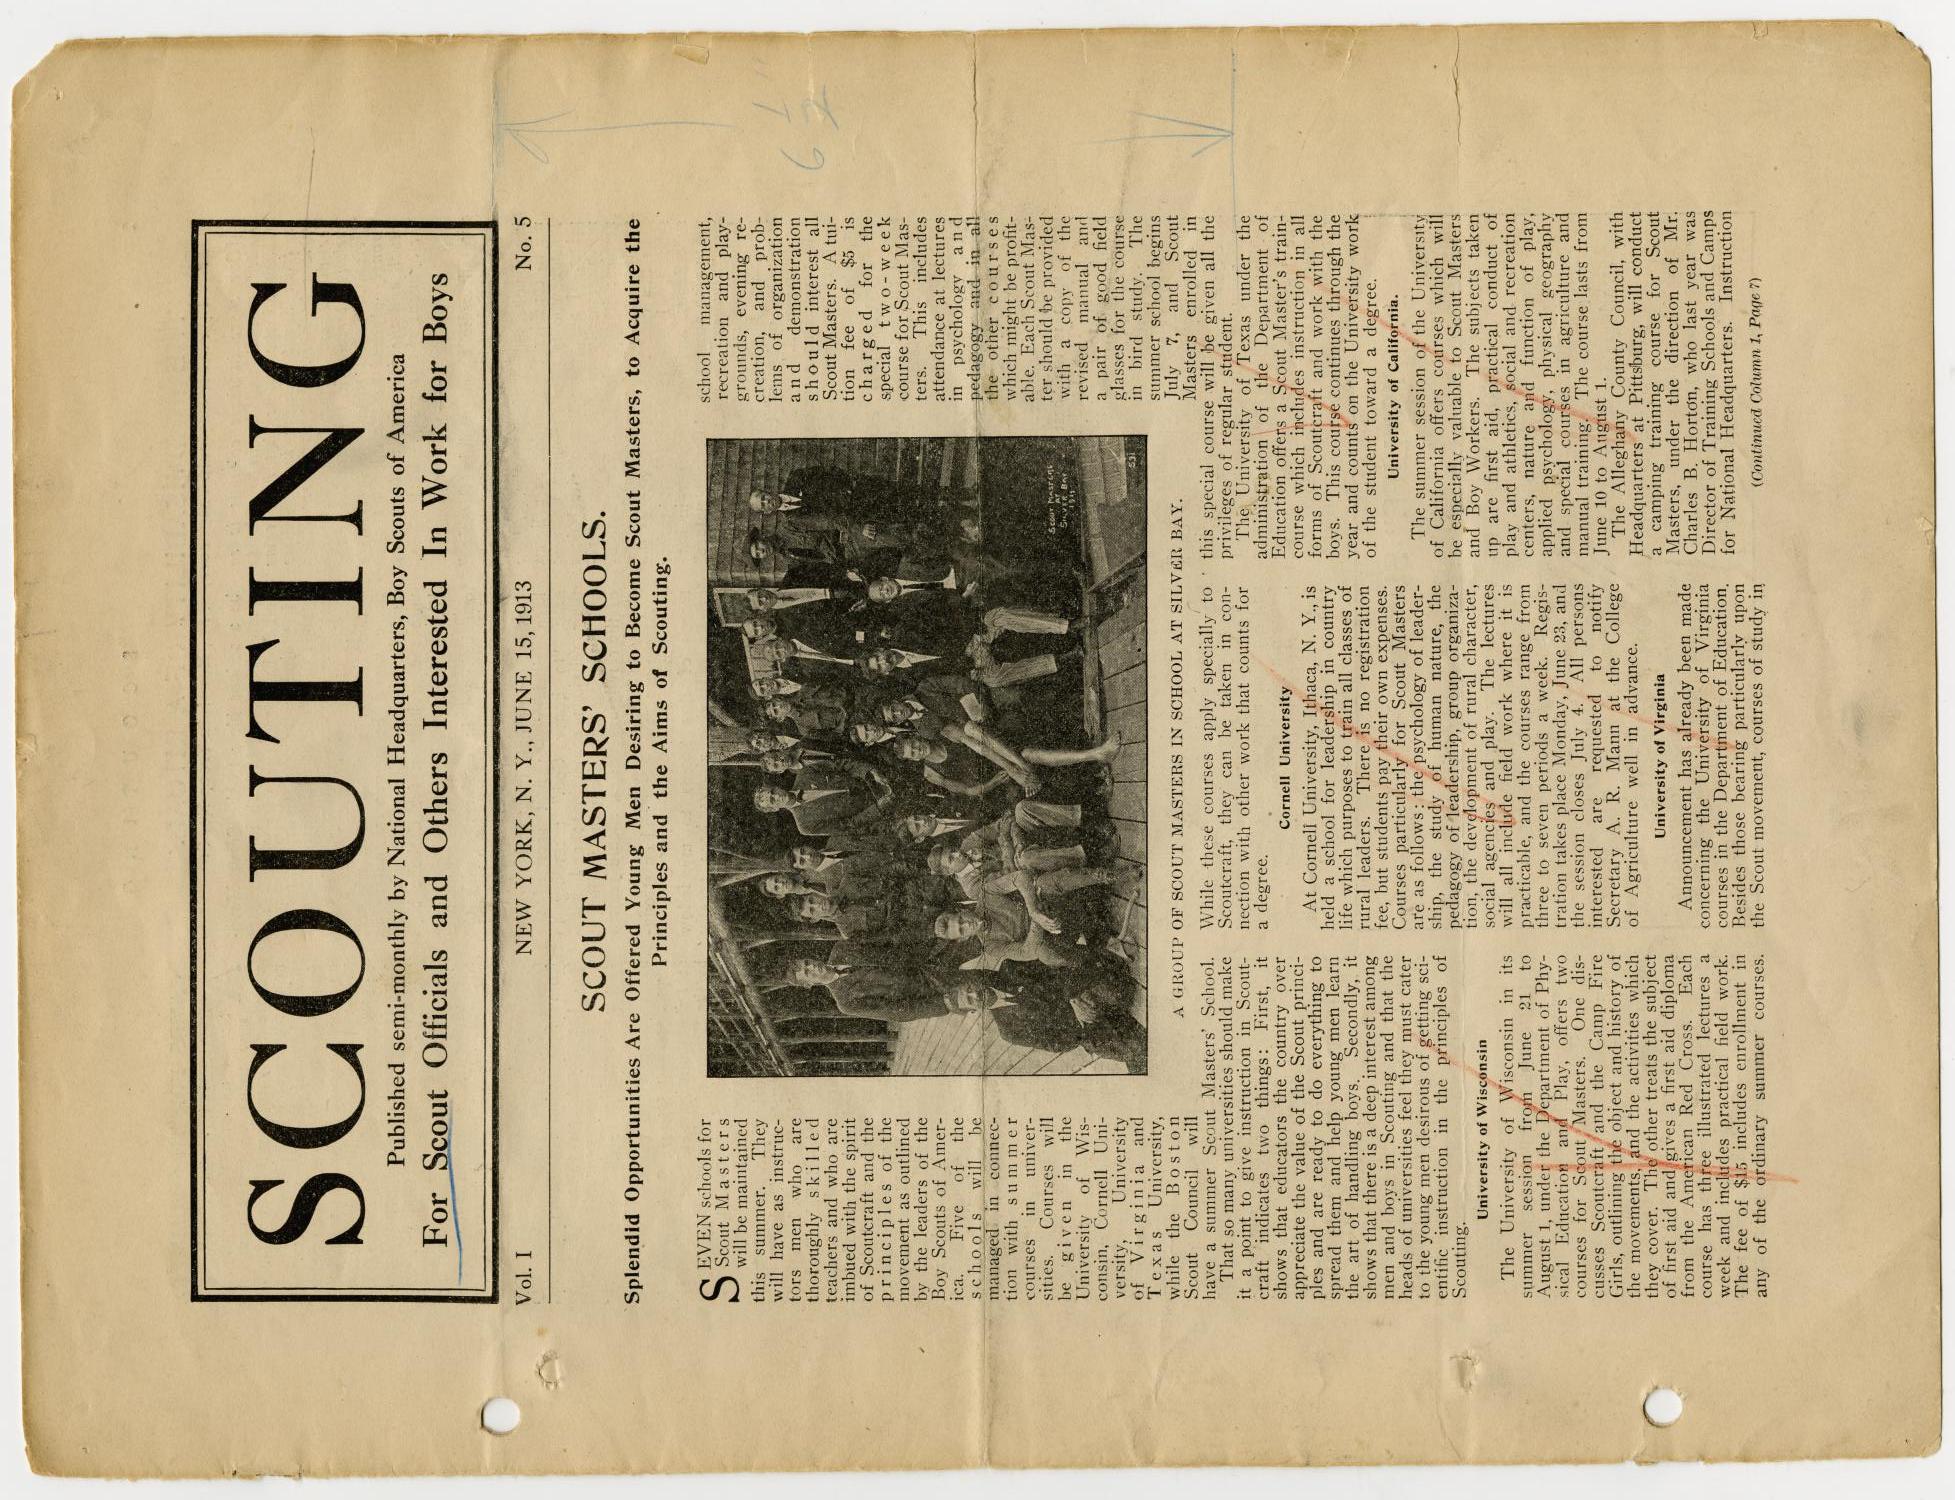 Scouting, Volume 1, Number 5, June 15, 1913
                                                
                                                    1
                                                